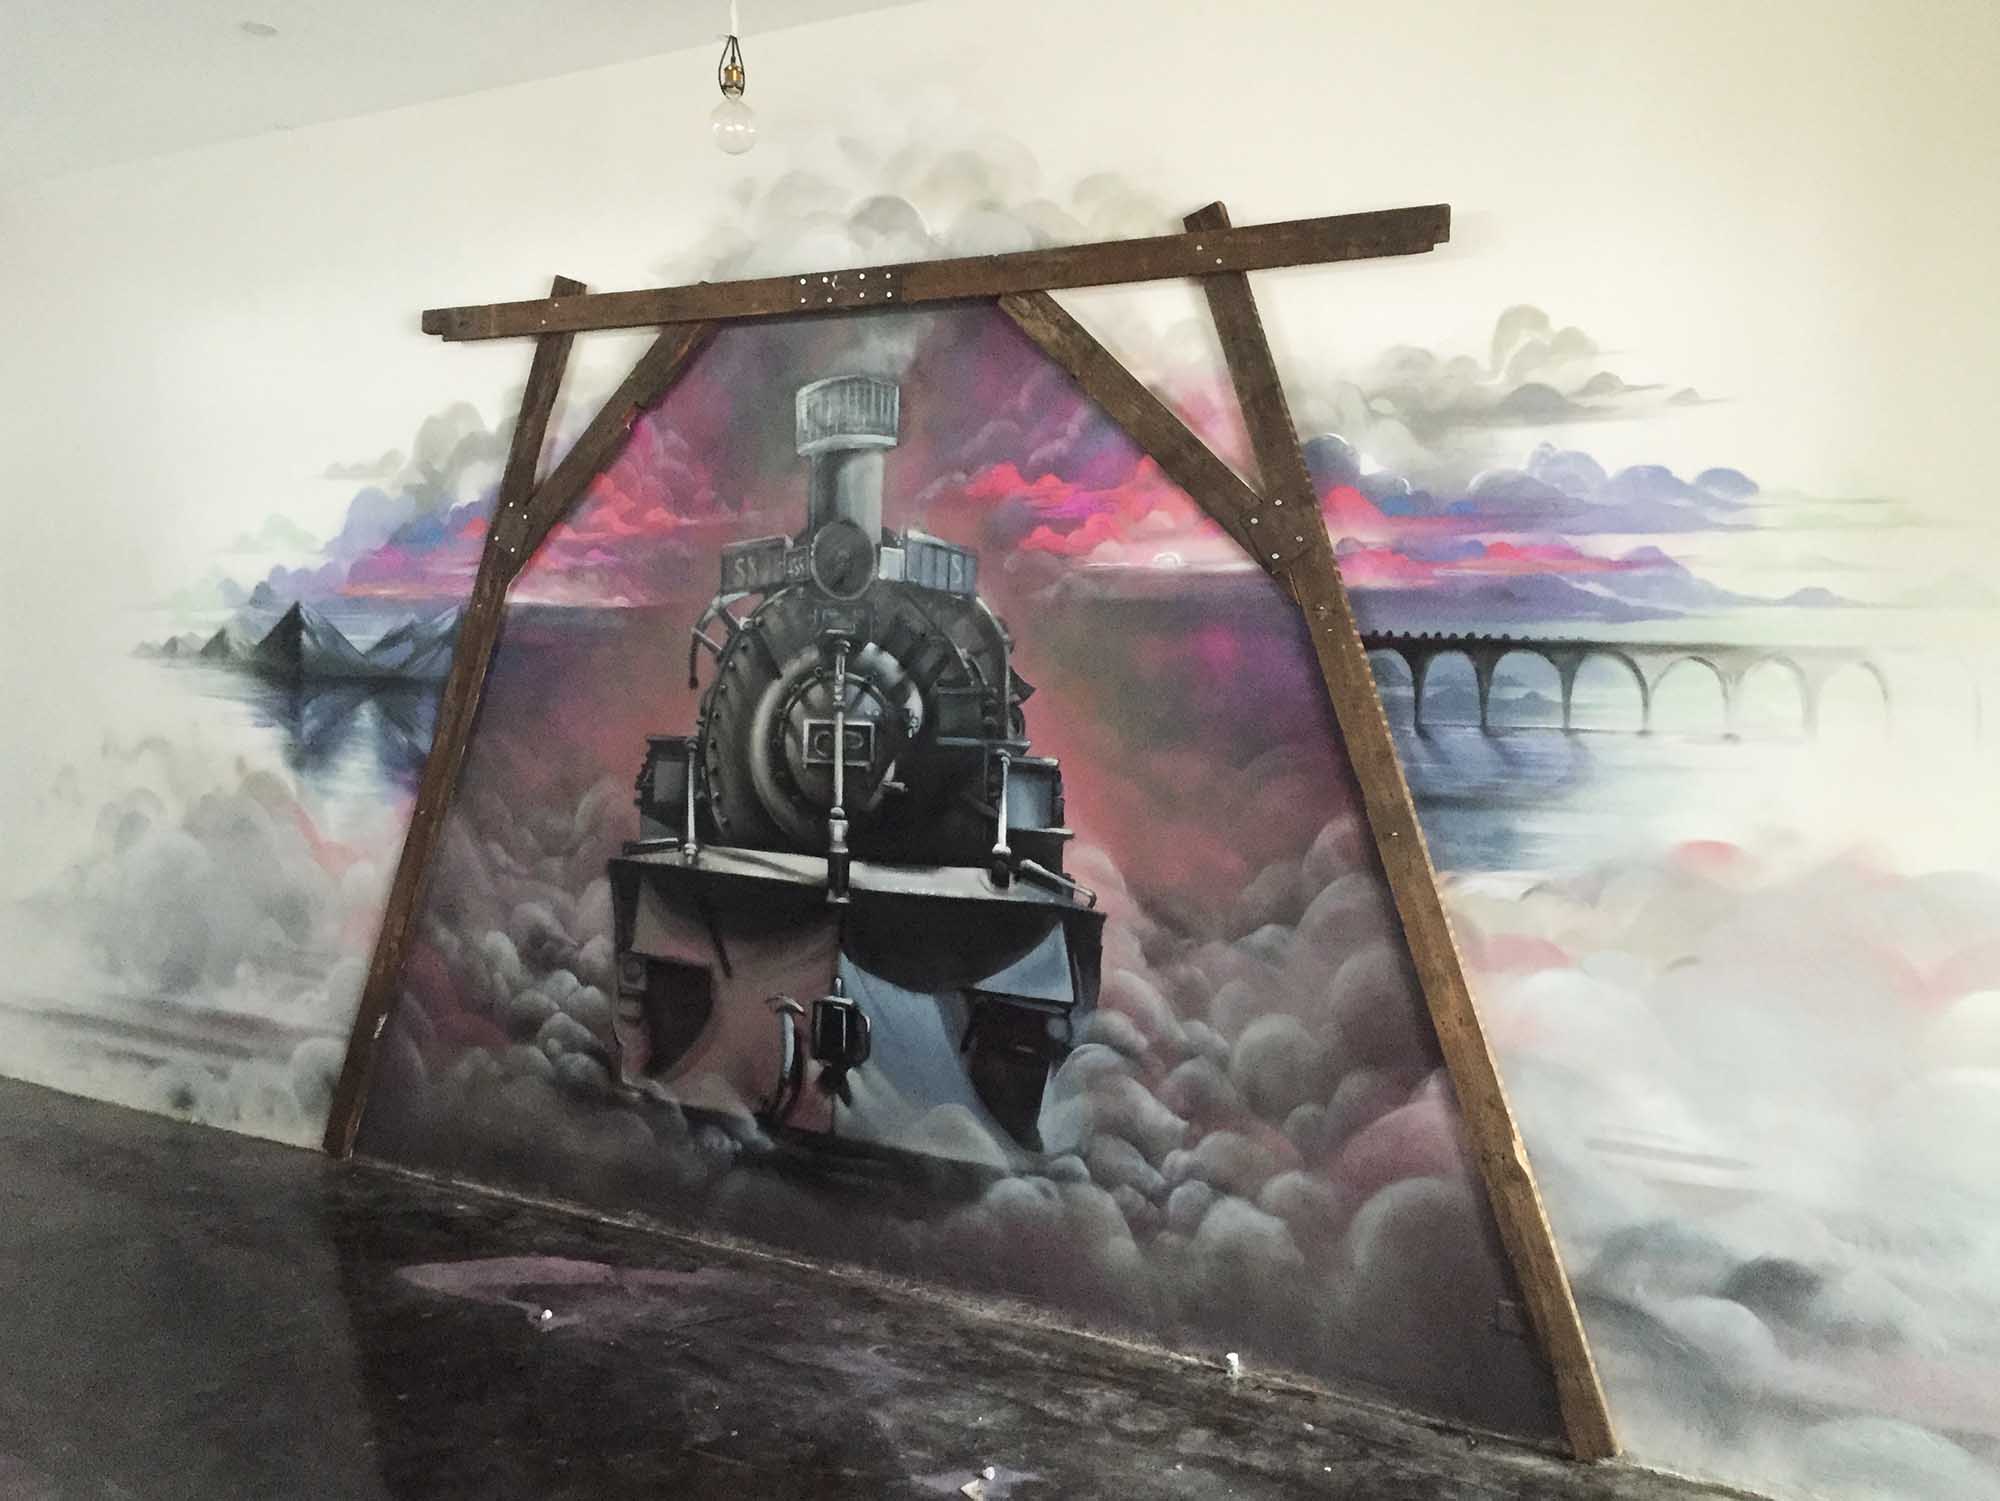 Coal pit restaurant wall mural interior design